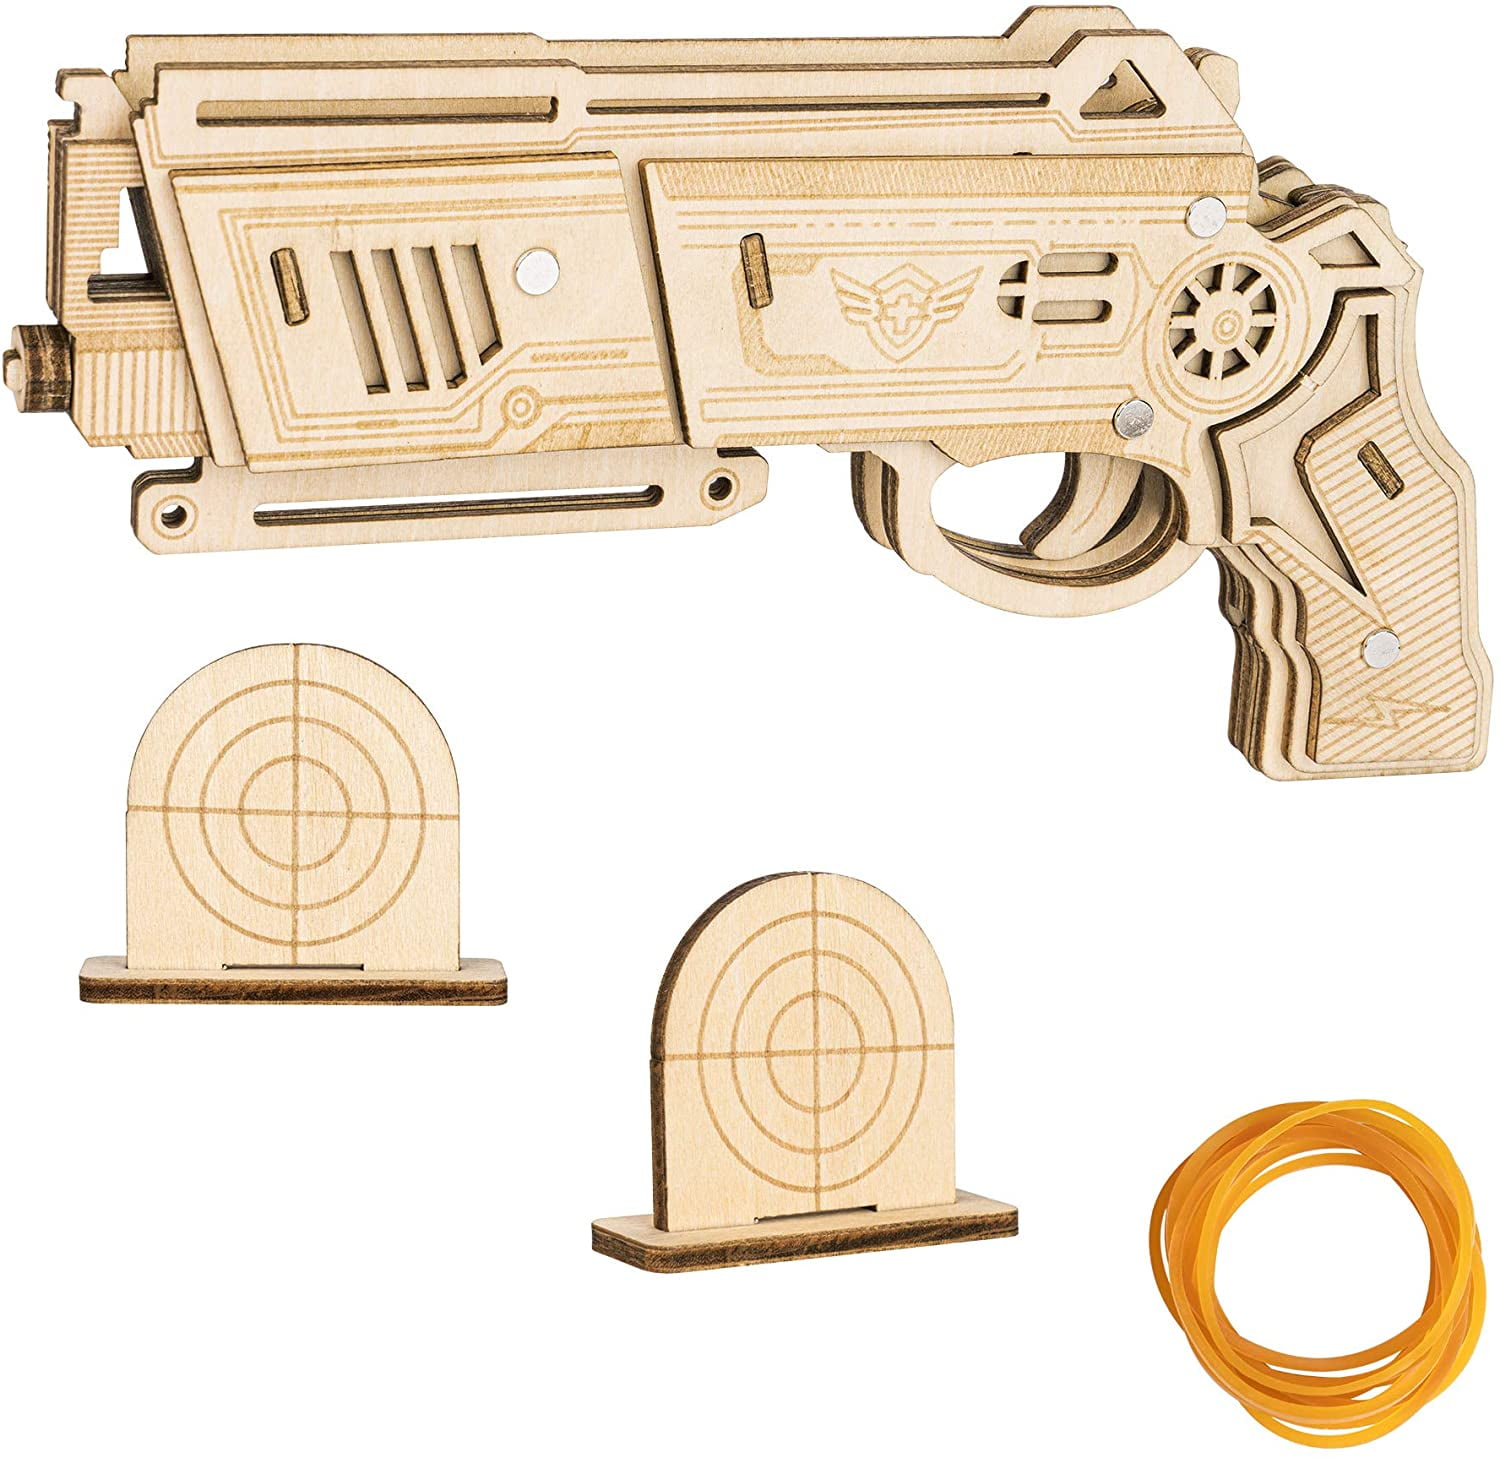 3D Wooden Puzzle Model Toy Gift Mechanical Model Brain Teaser Shotgun Toy 